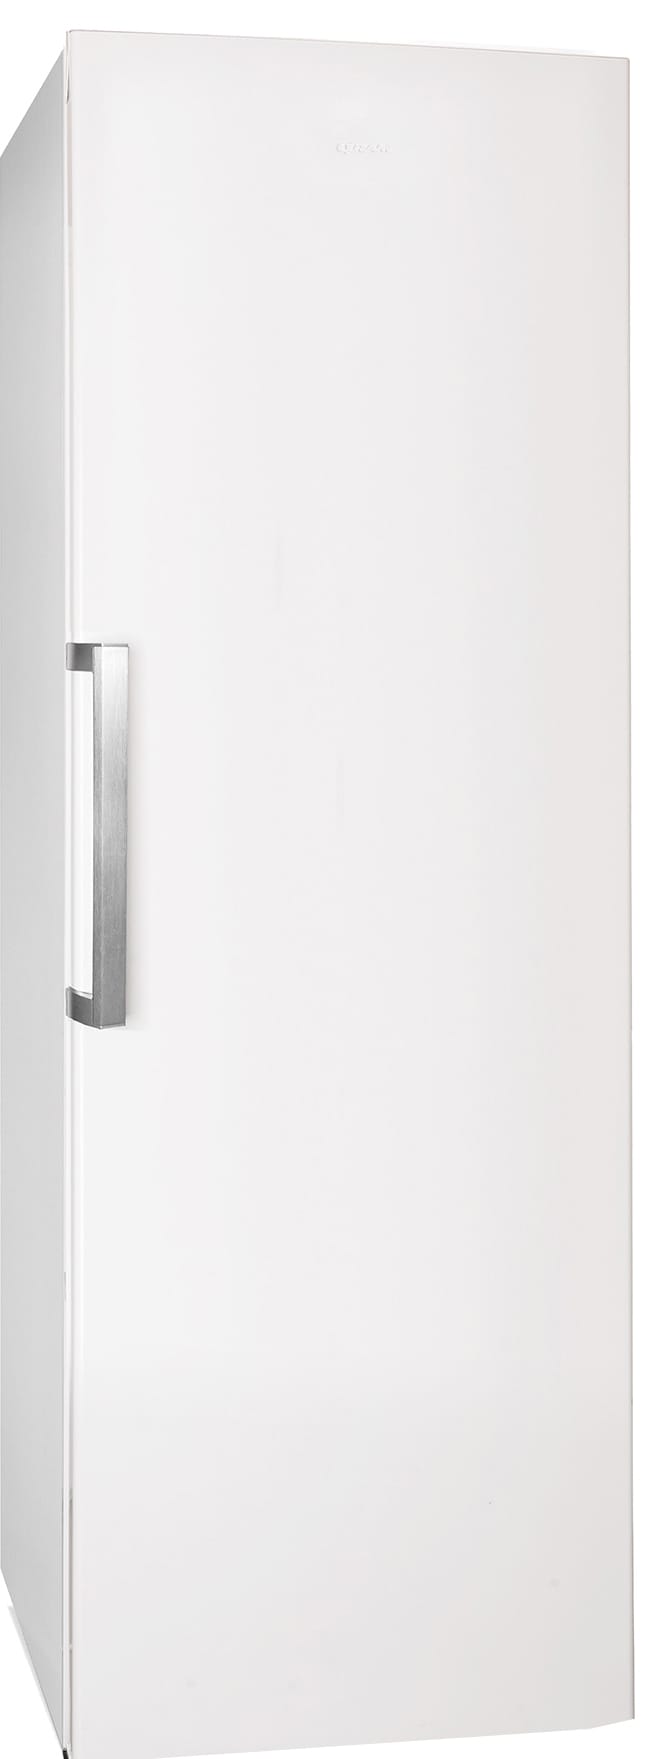 Gram køleskab LC342186 thumbnail